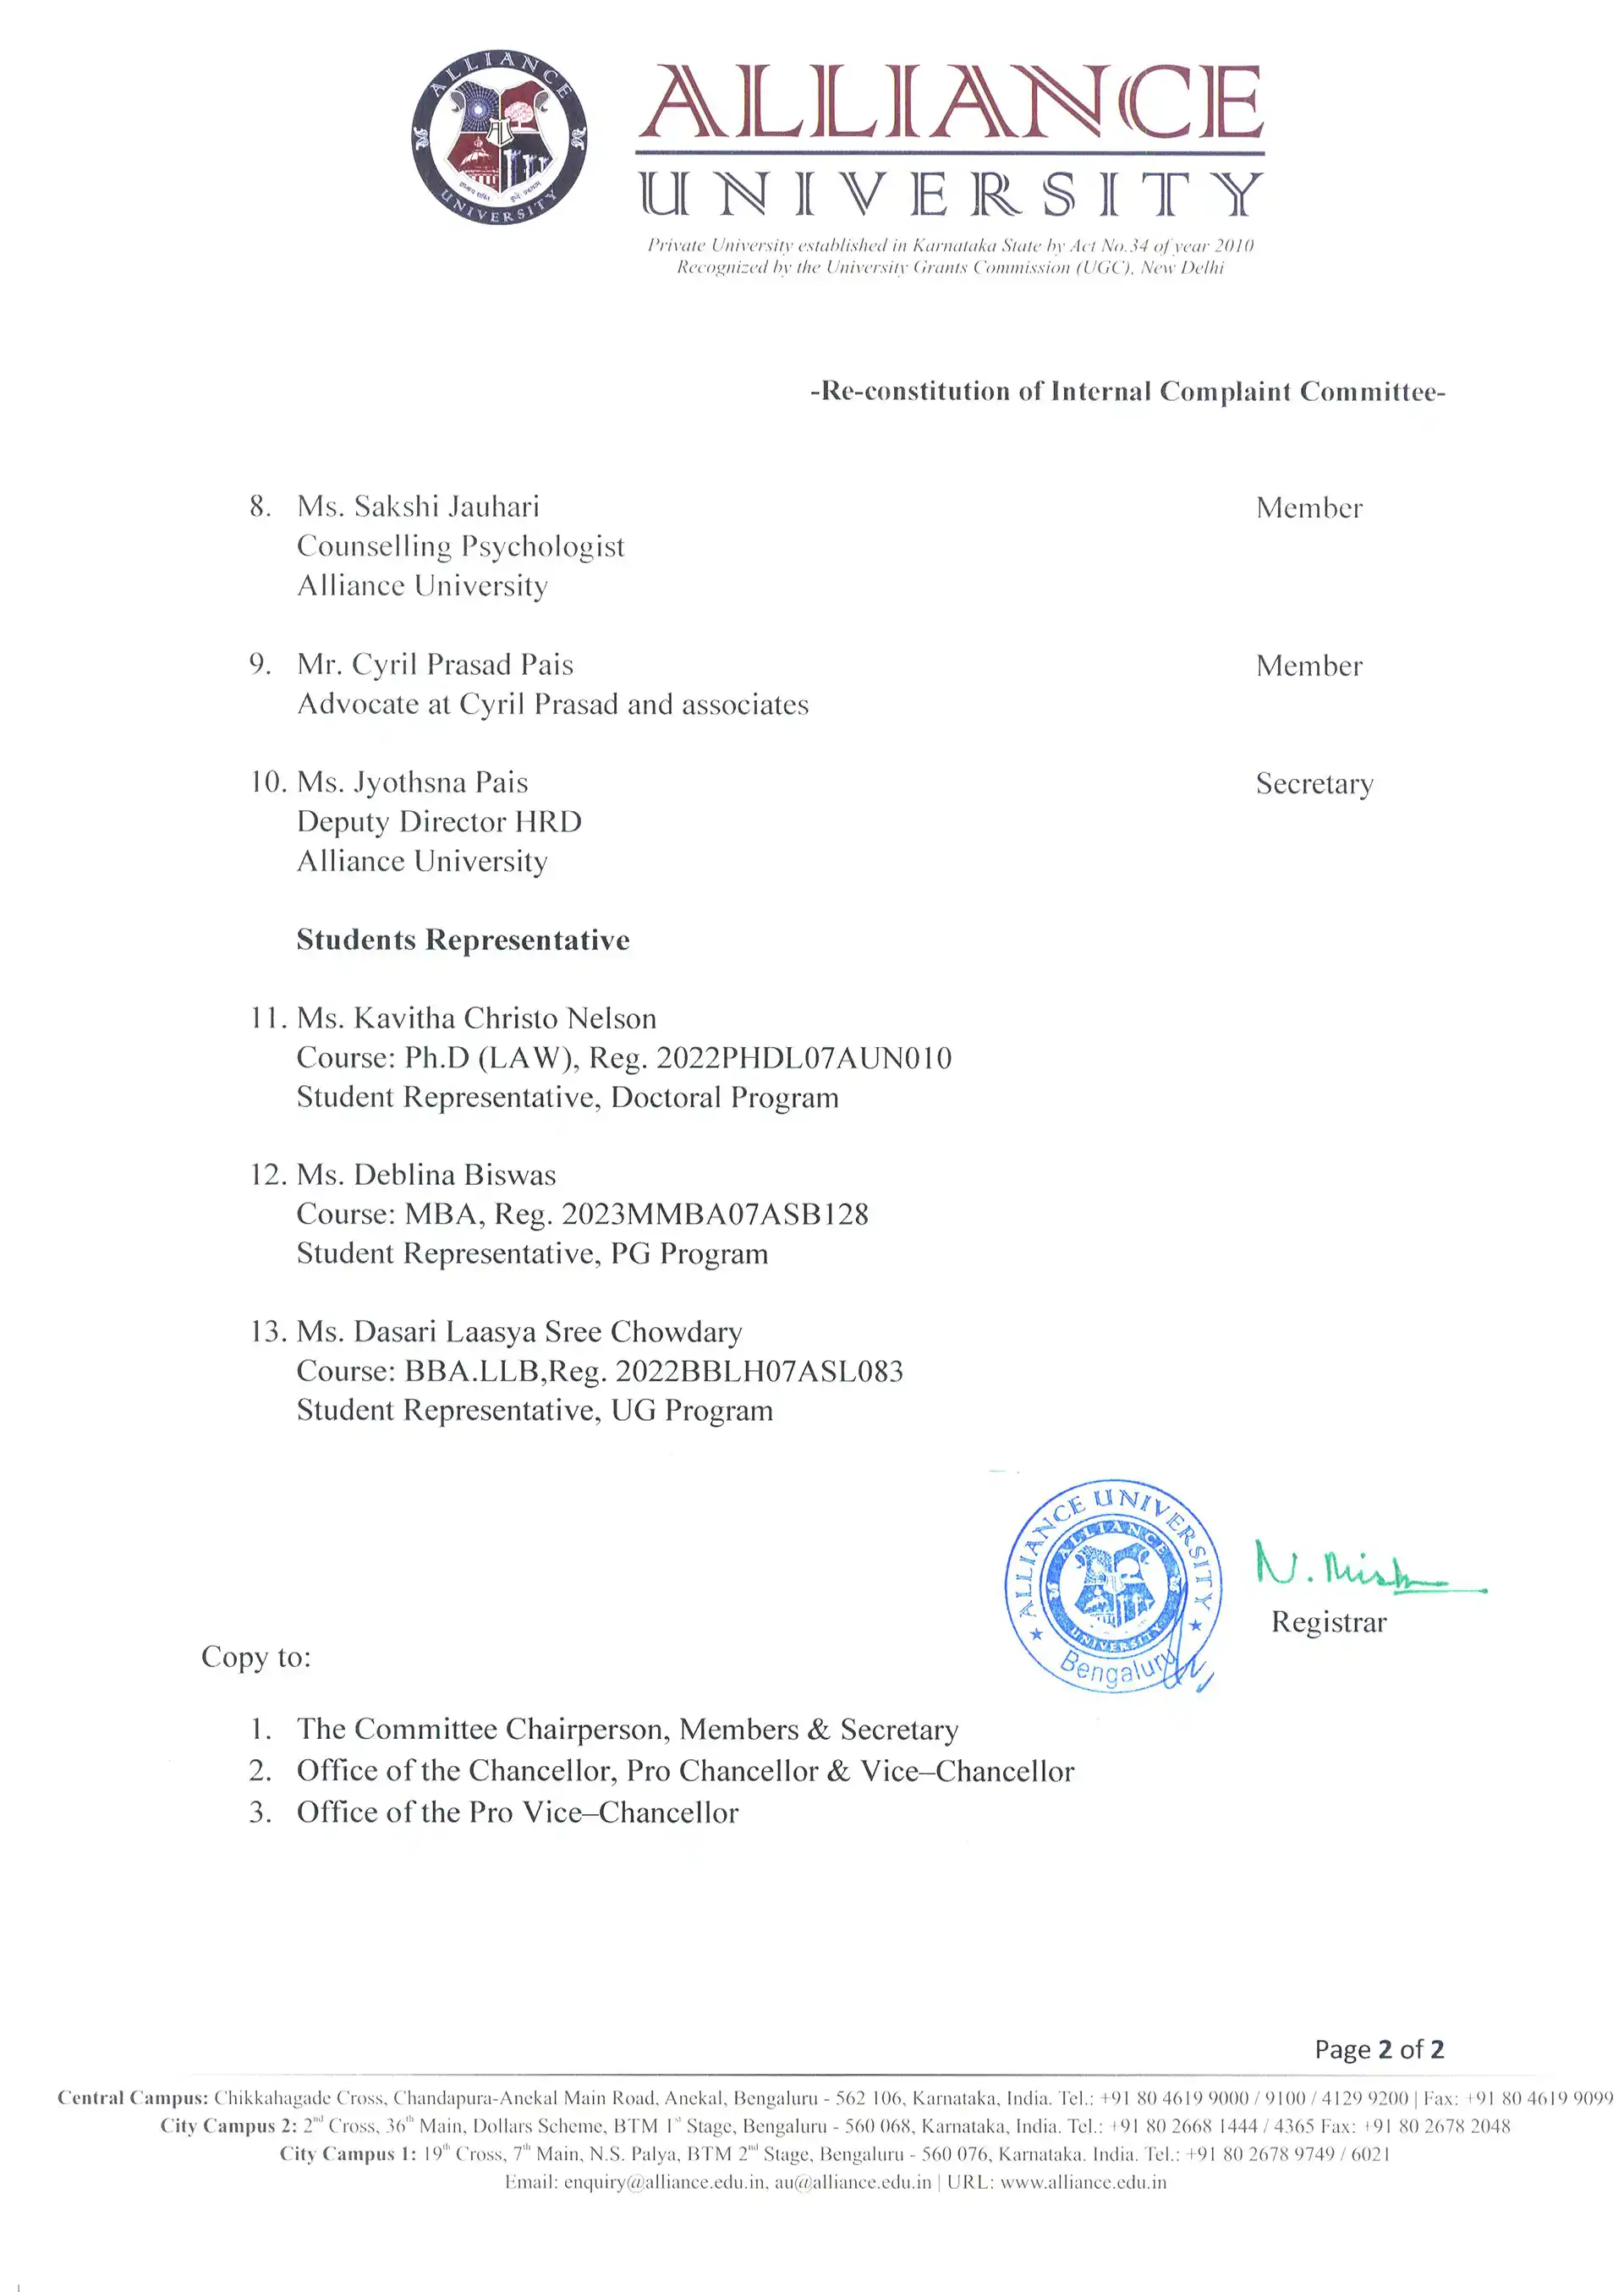 Reconstitution of Internal Complaint Committee of Alliance University, Bengaluru - 2